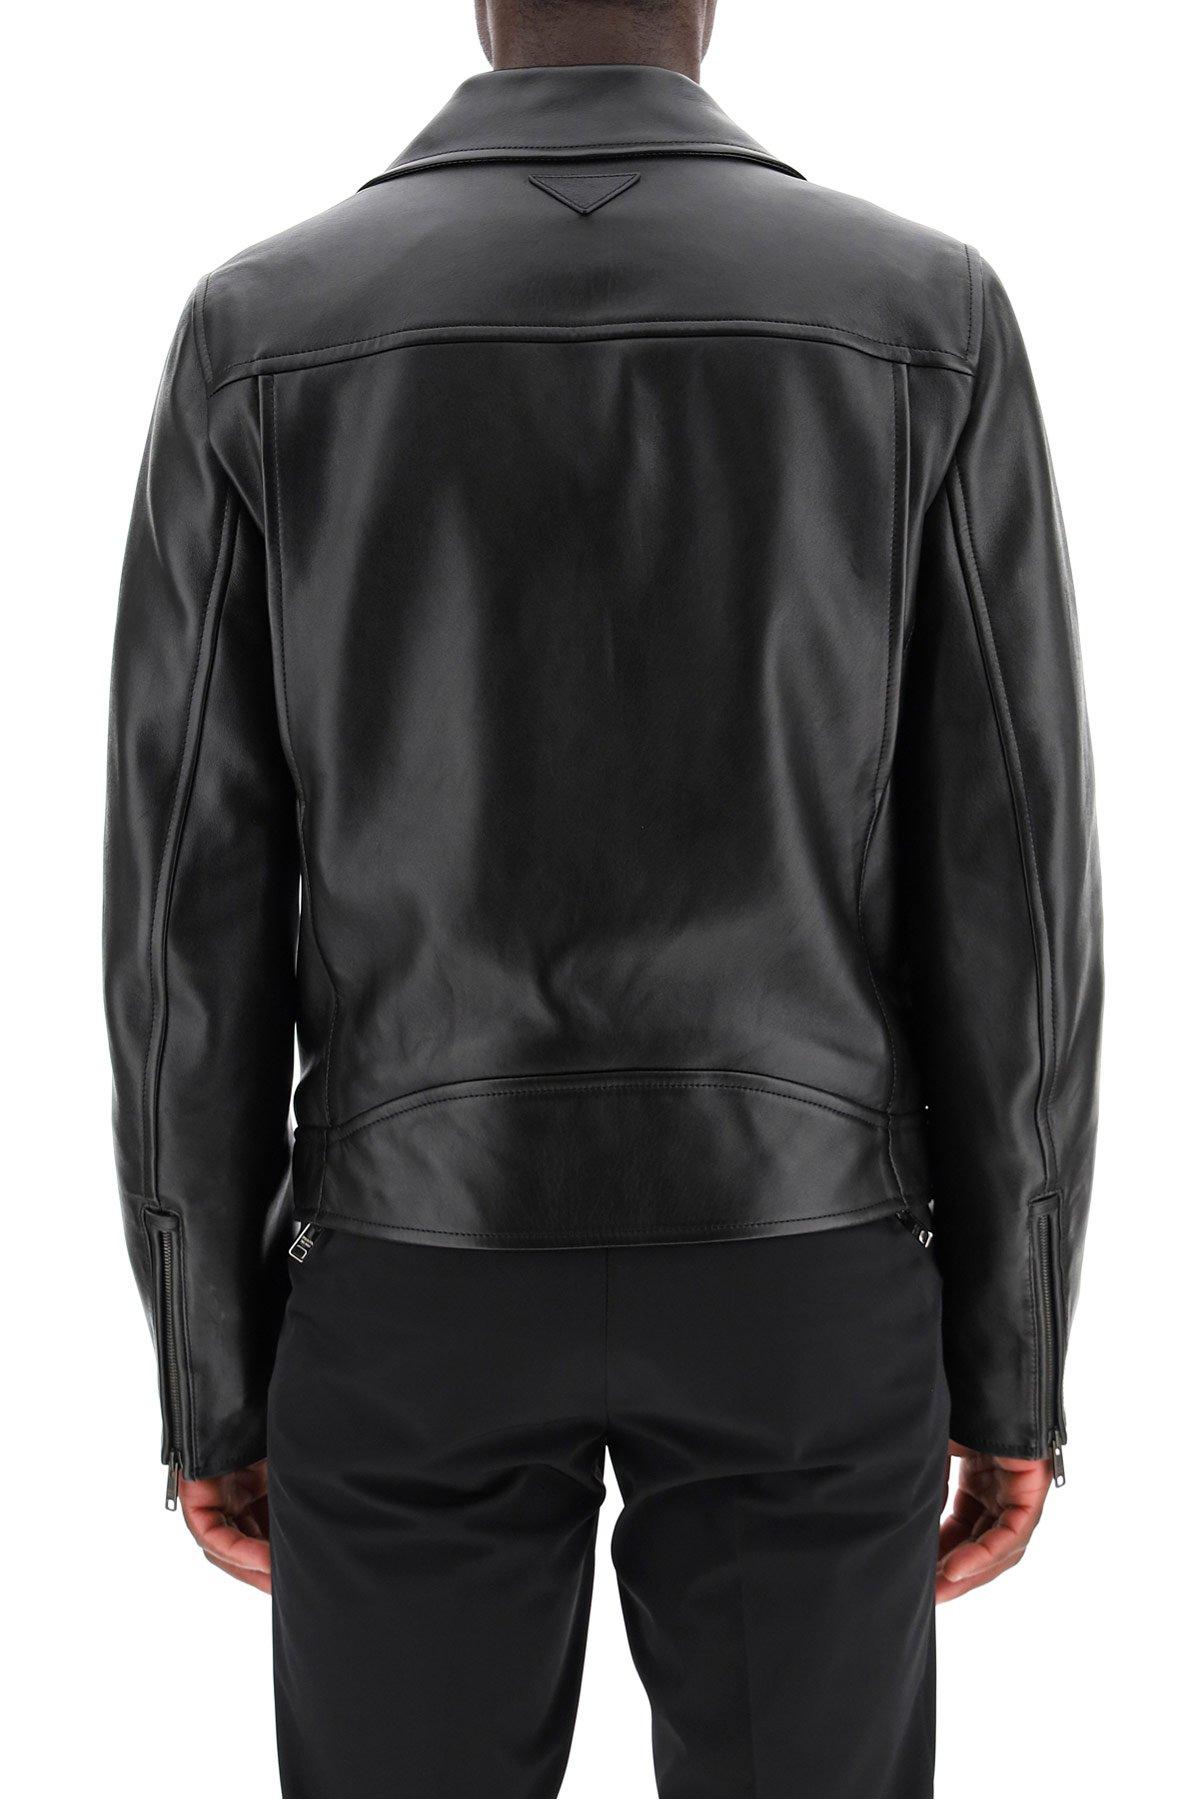 Prada Leather Zipped Biker Jacket in Black for Men - Save 7% - Lyst